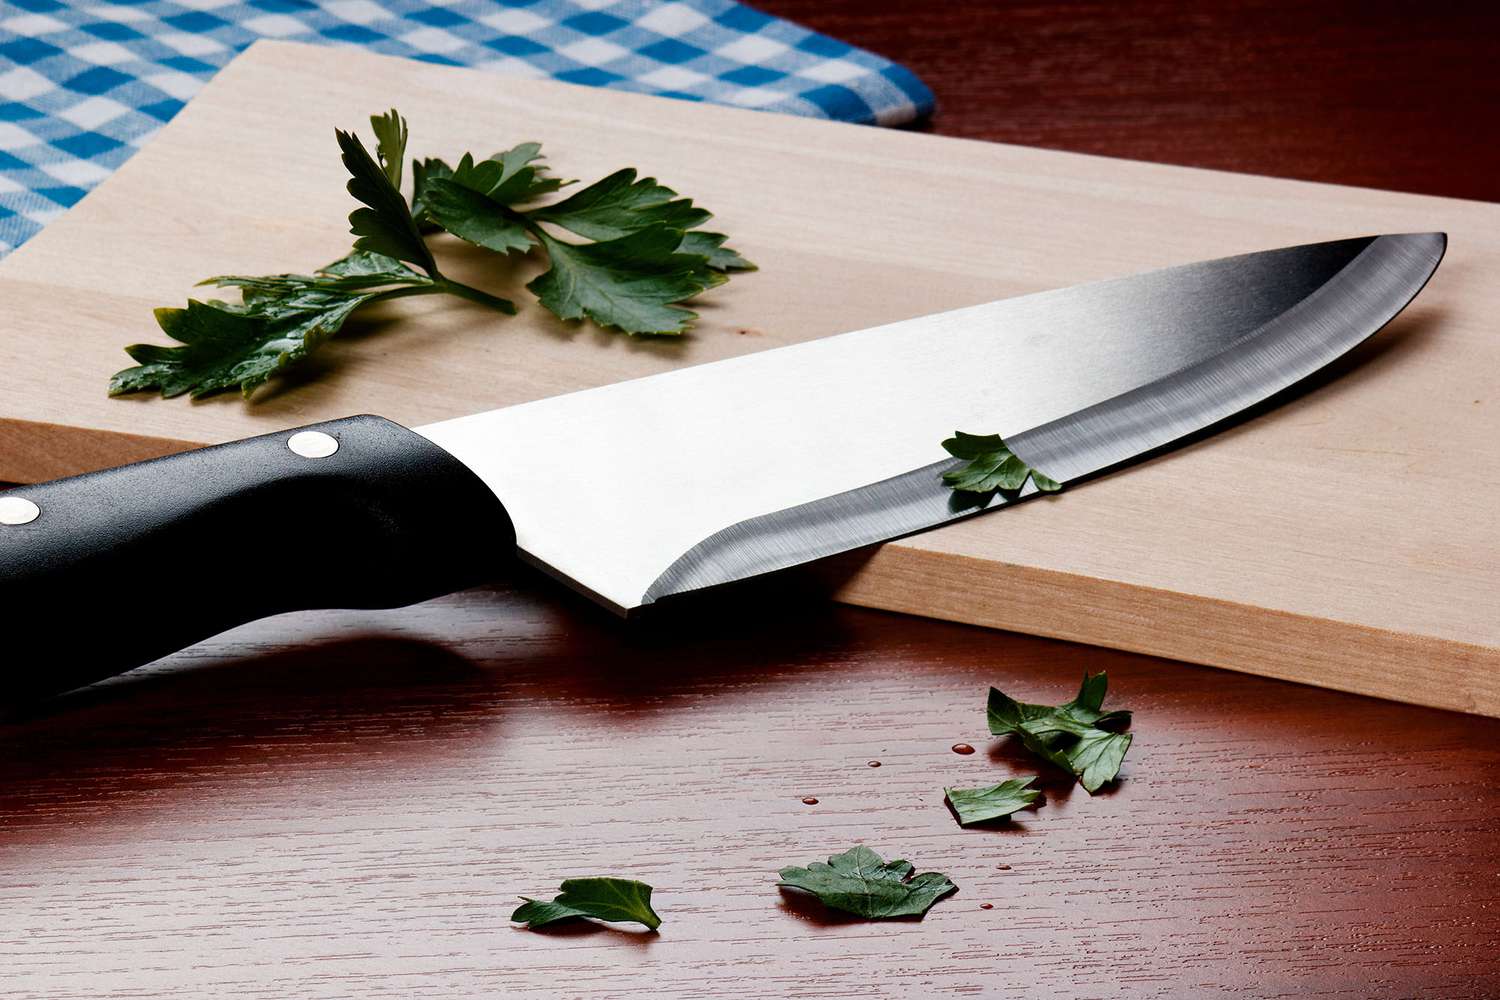 knife for self-defense